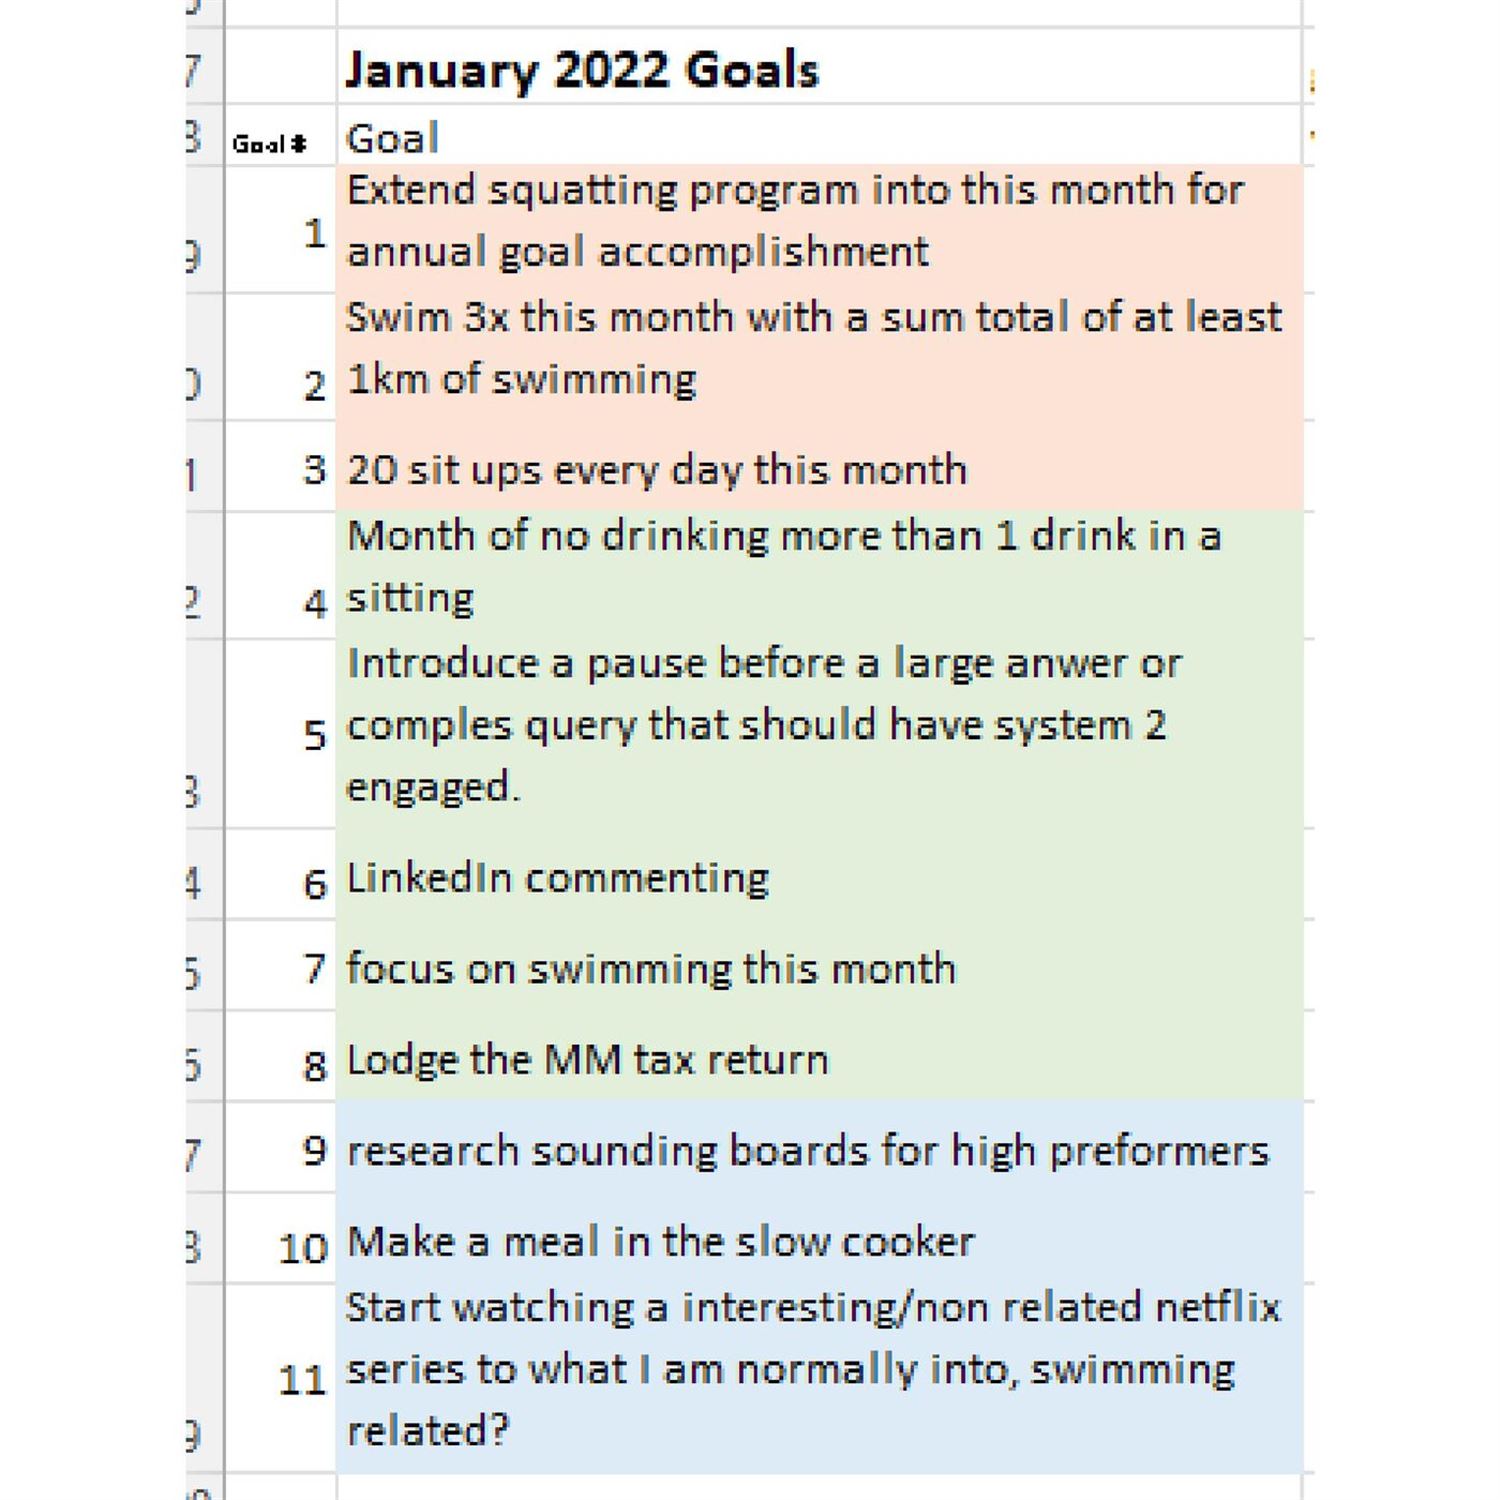 Juan's Soul January goals